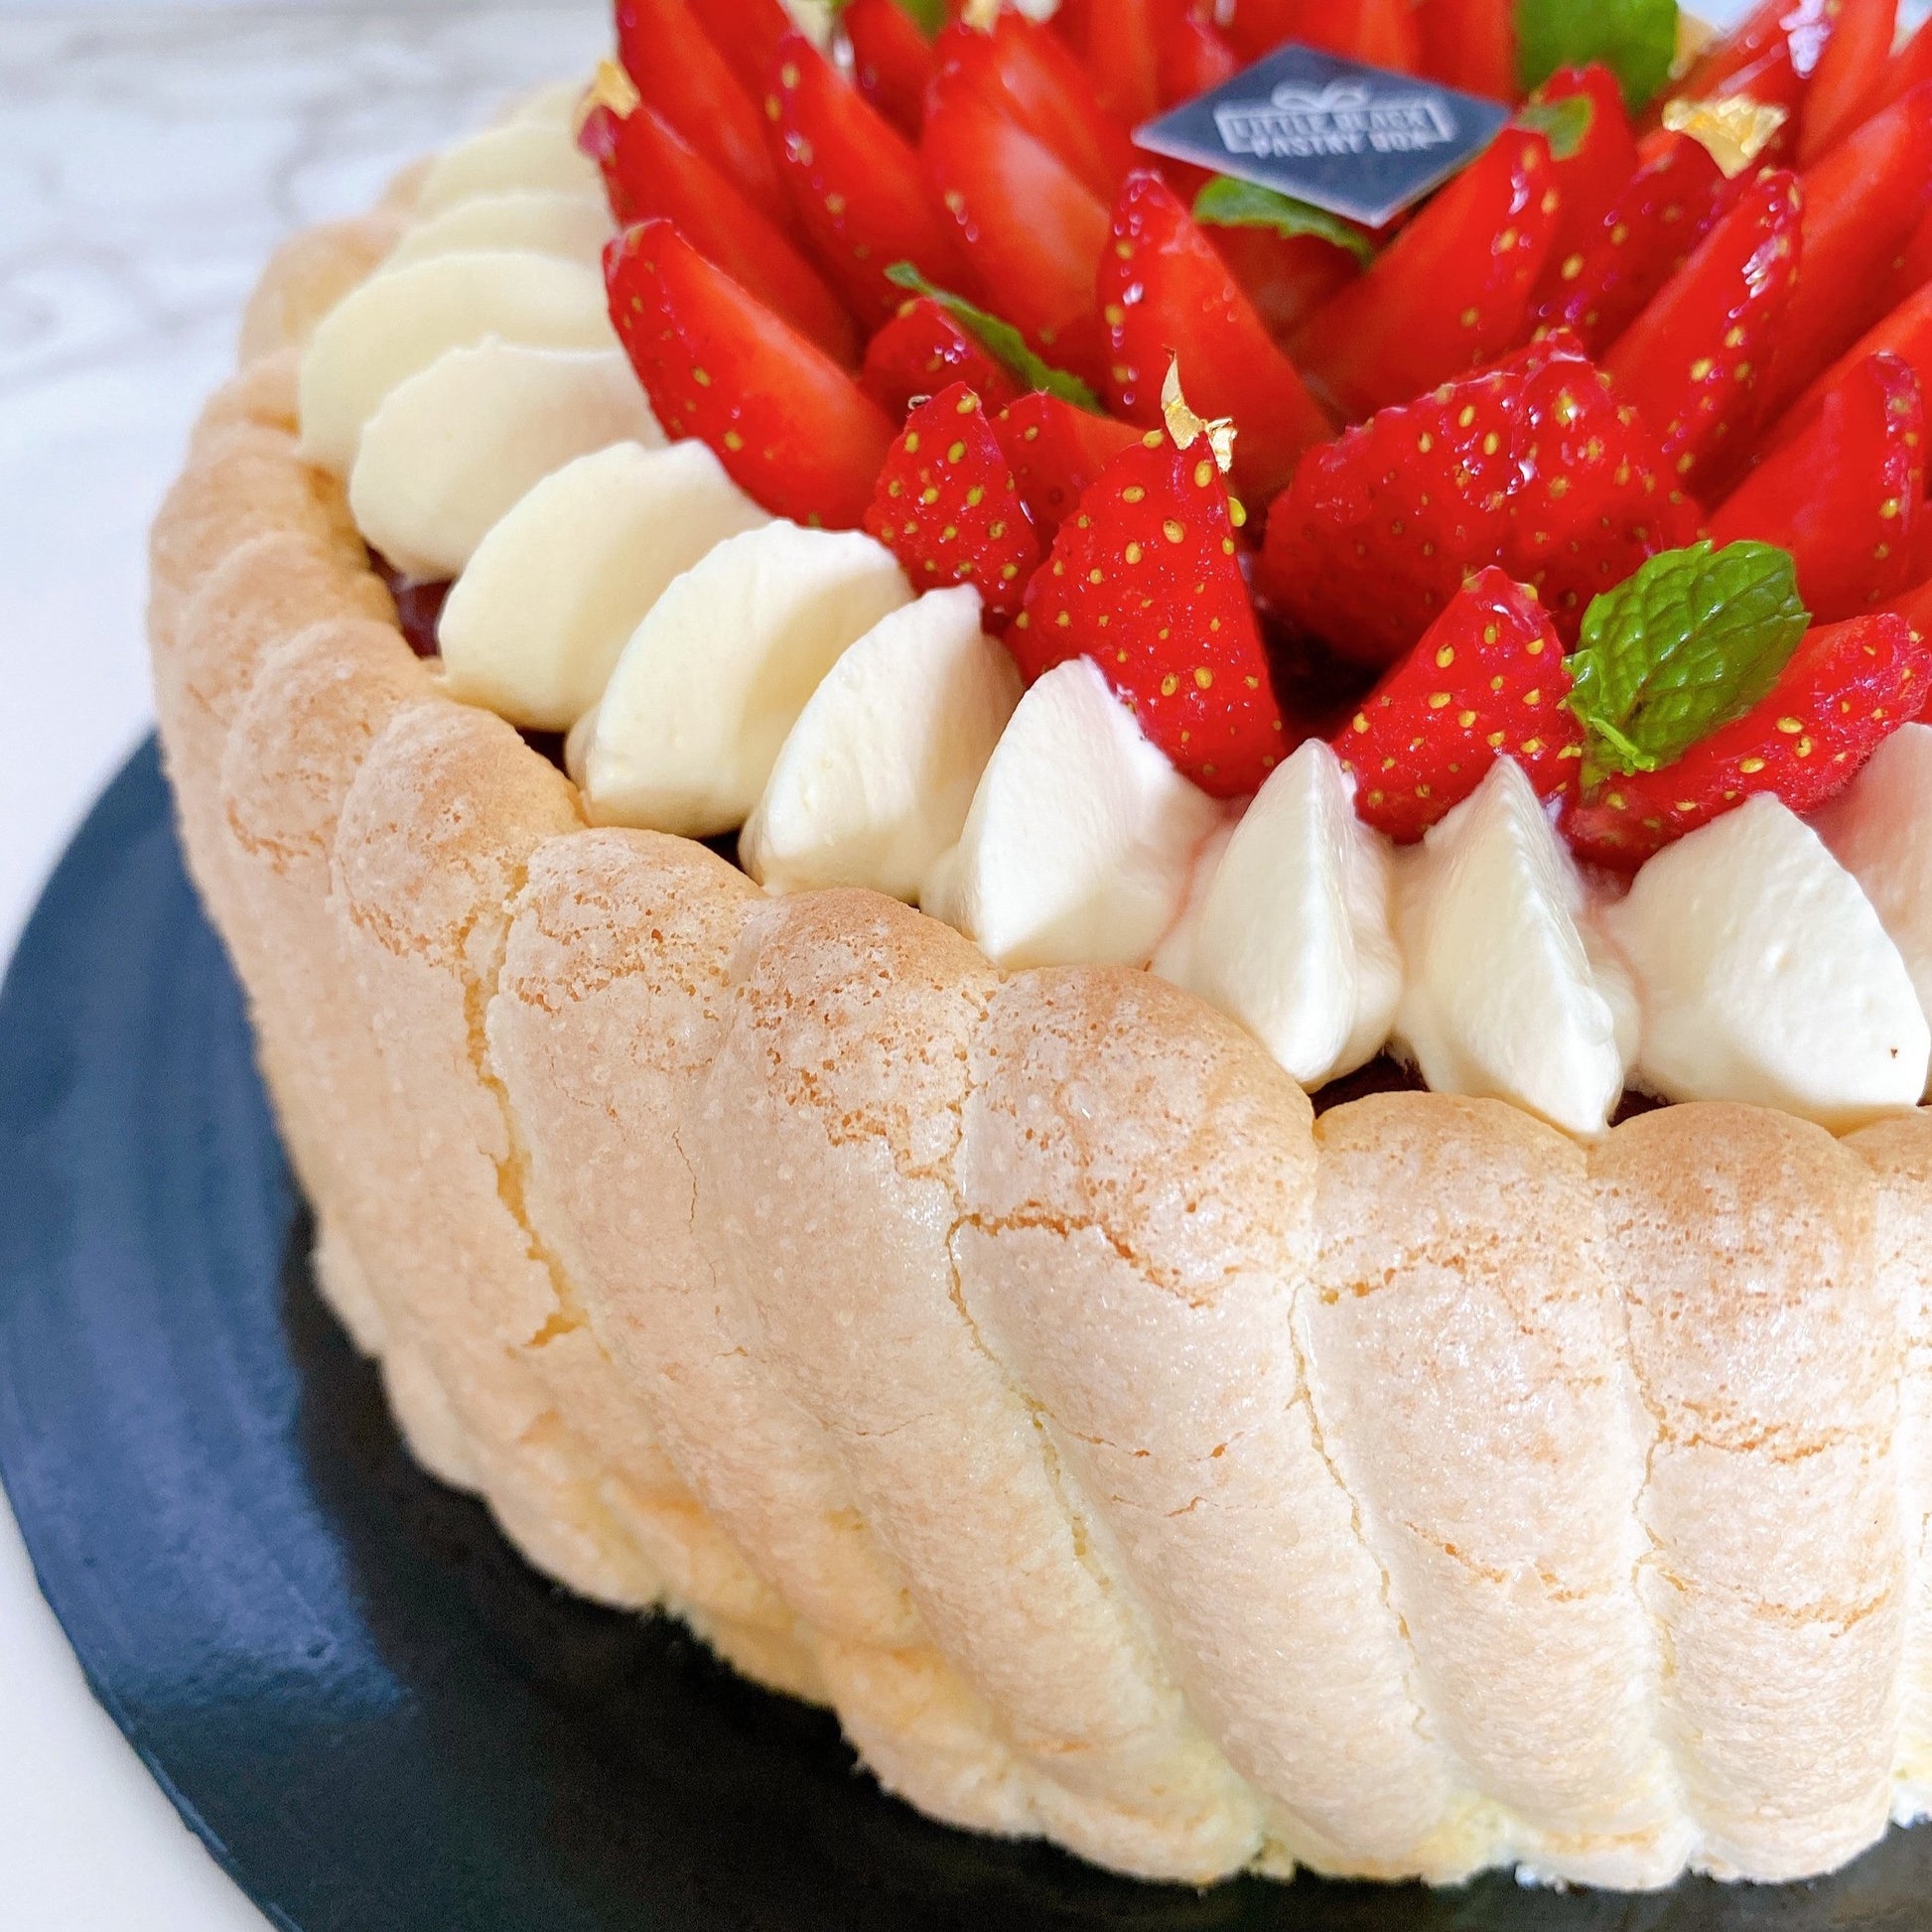 strawberry-charlotte-Little-Black-Pastry-Box-Patisserie-bakery-Pastry-cakes-Desserts, Birthday, Best cake delivery KL PJ Selangor, Same day.